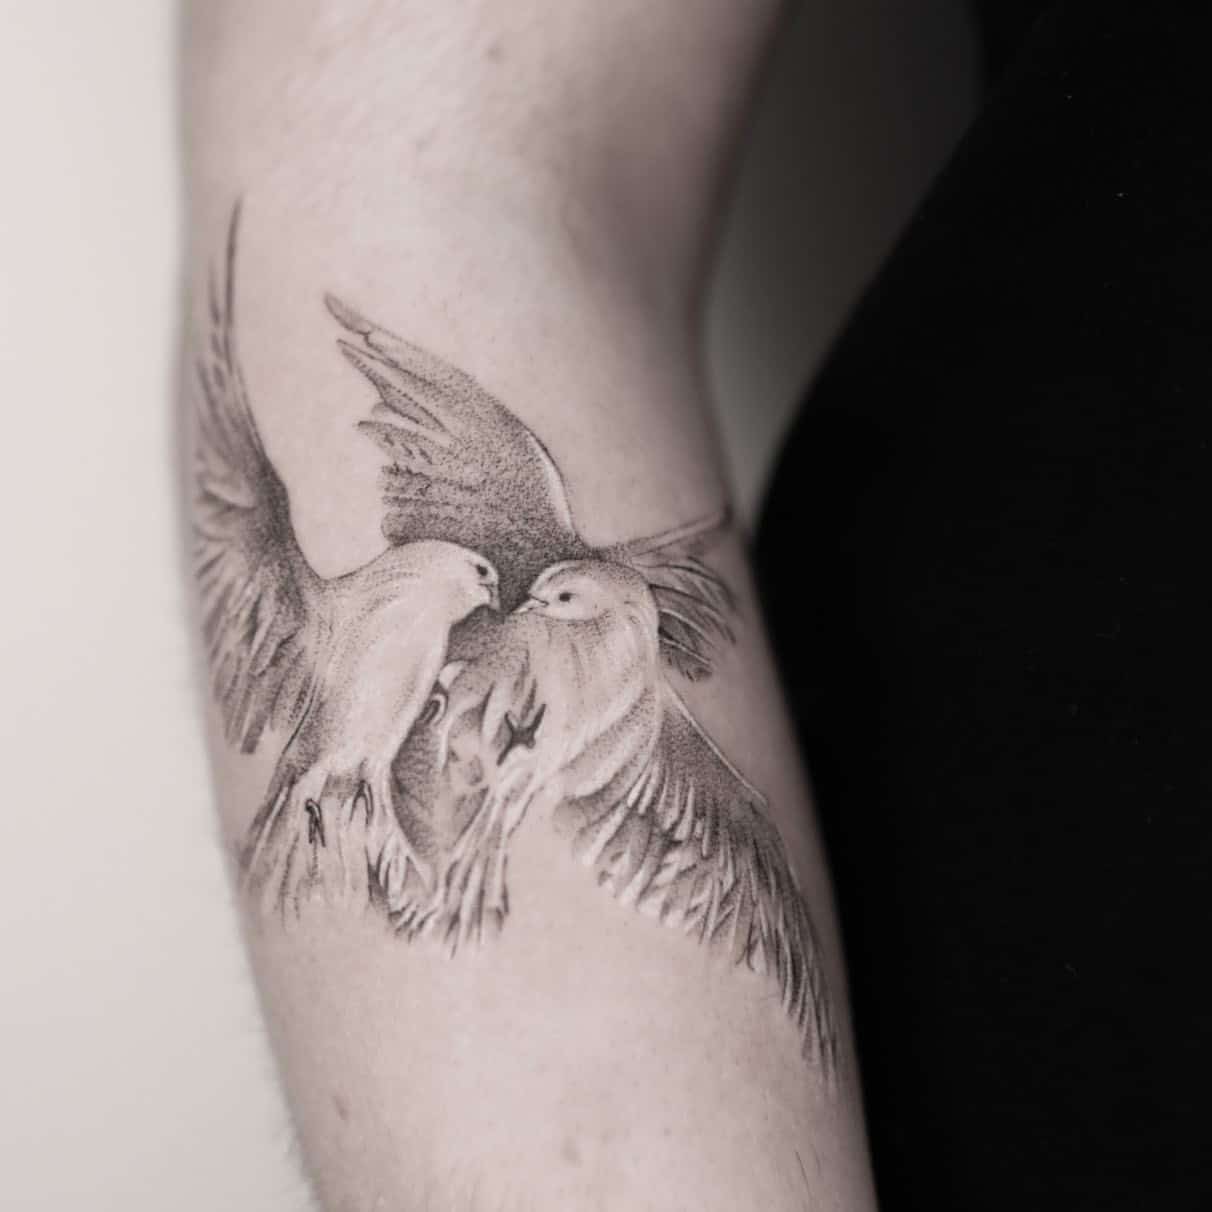 Small Bird Tattoo Design - Small Bird Tattoos - Small Tattoos - MomCanvas